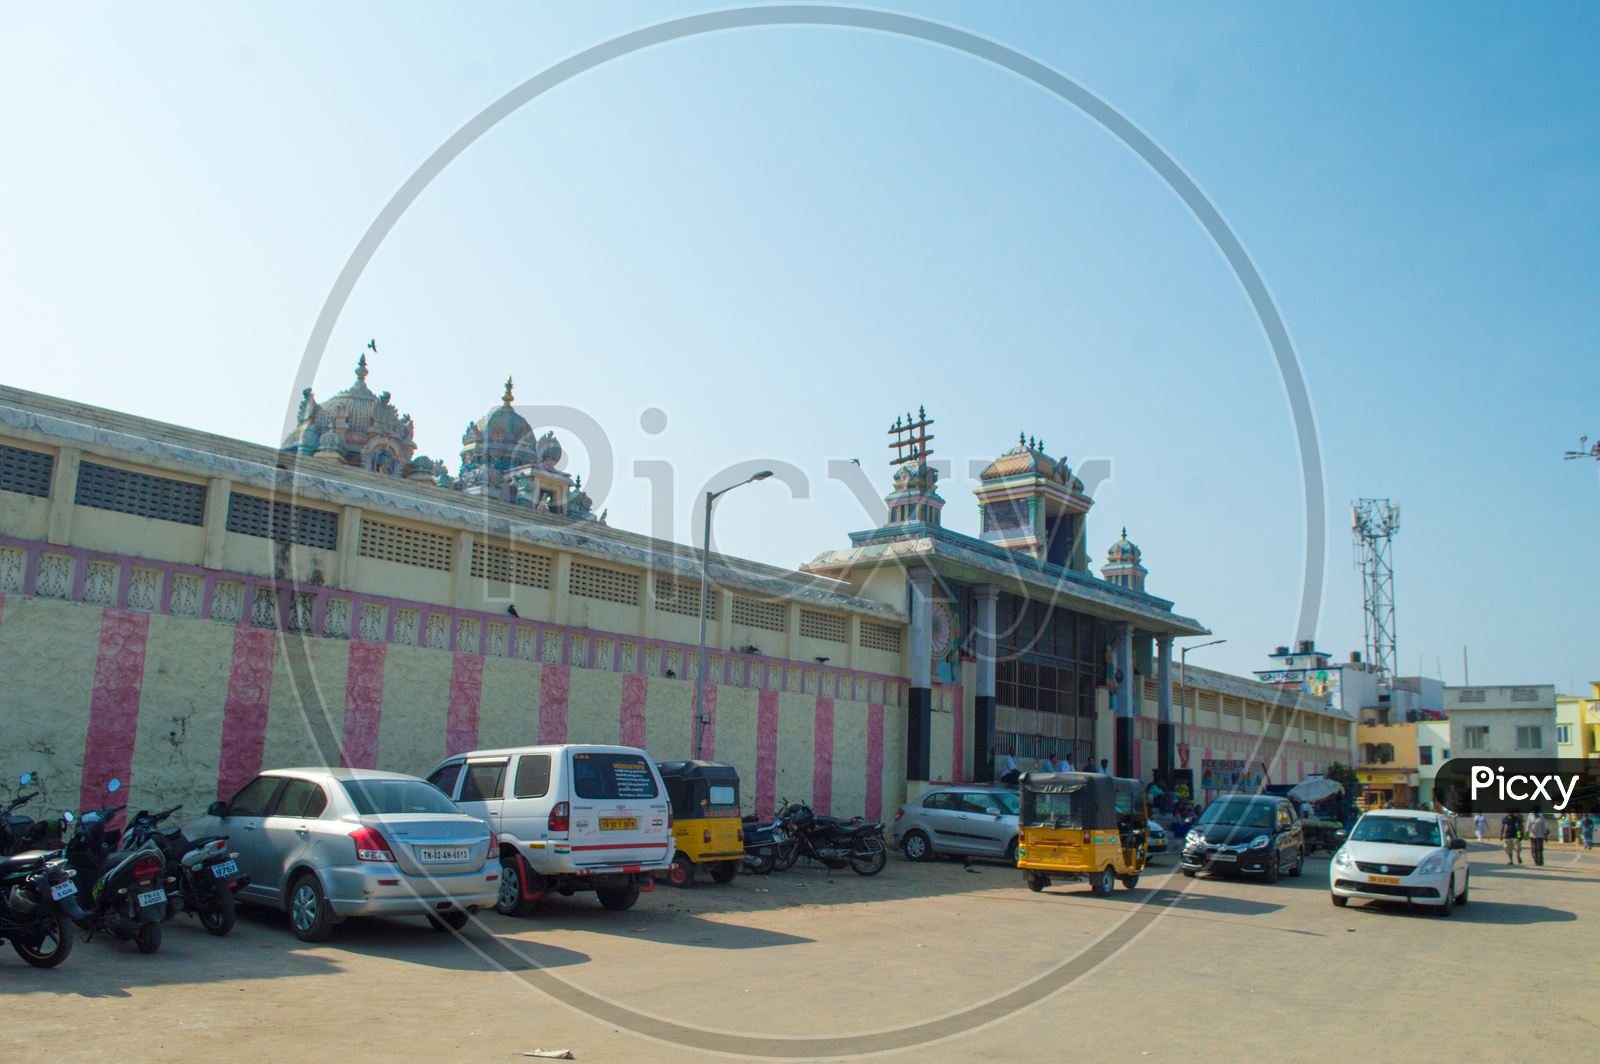 Ashtalakshmi Temple, Chennai